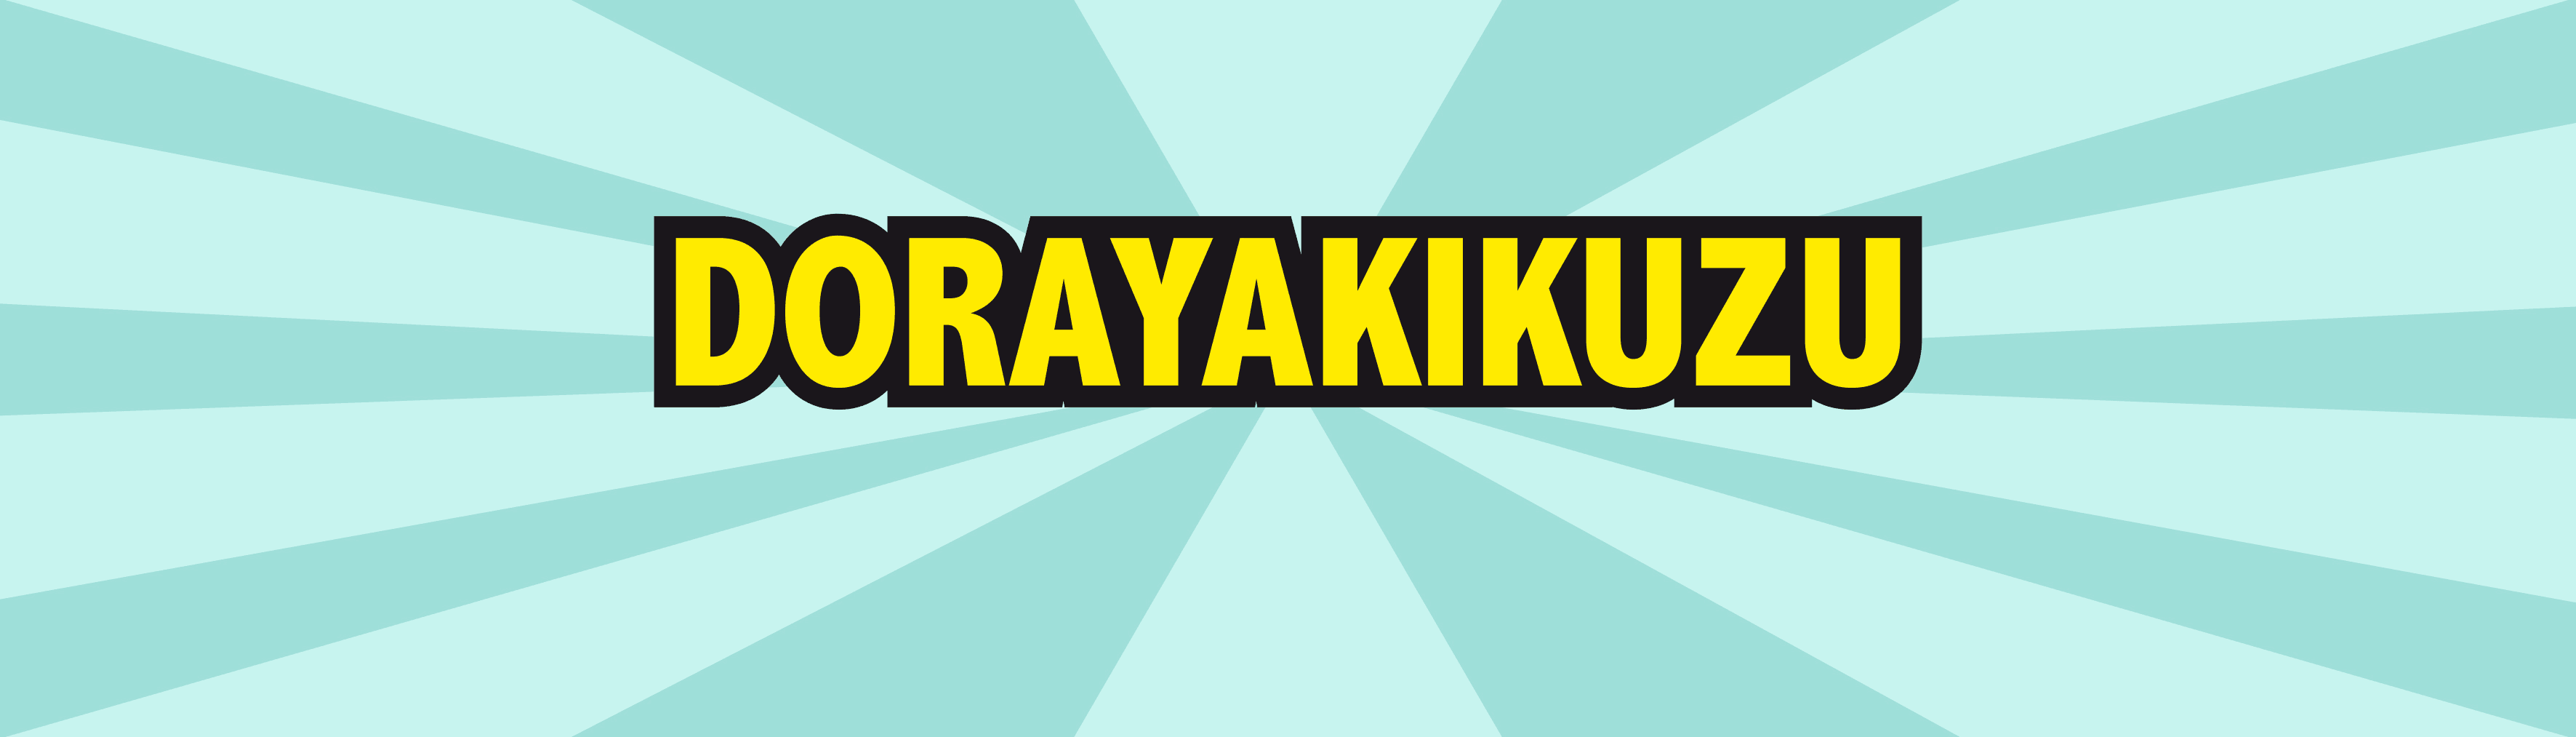 DORAYAKIKUZU banner